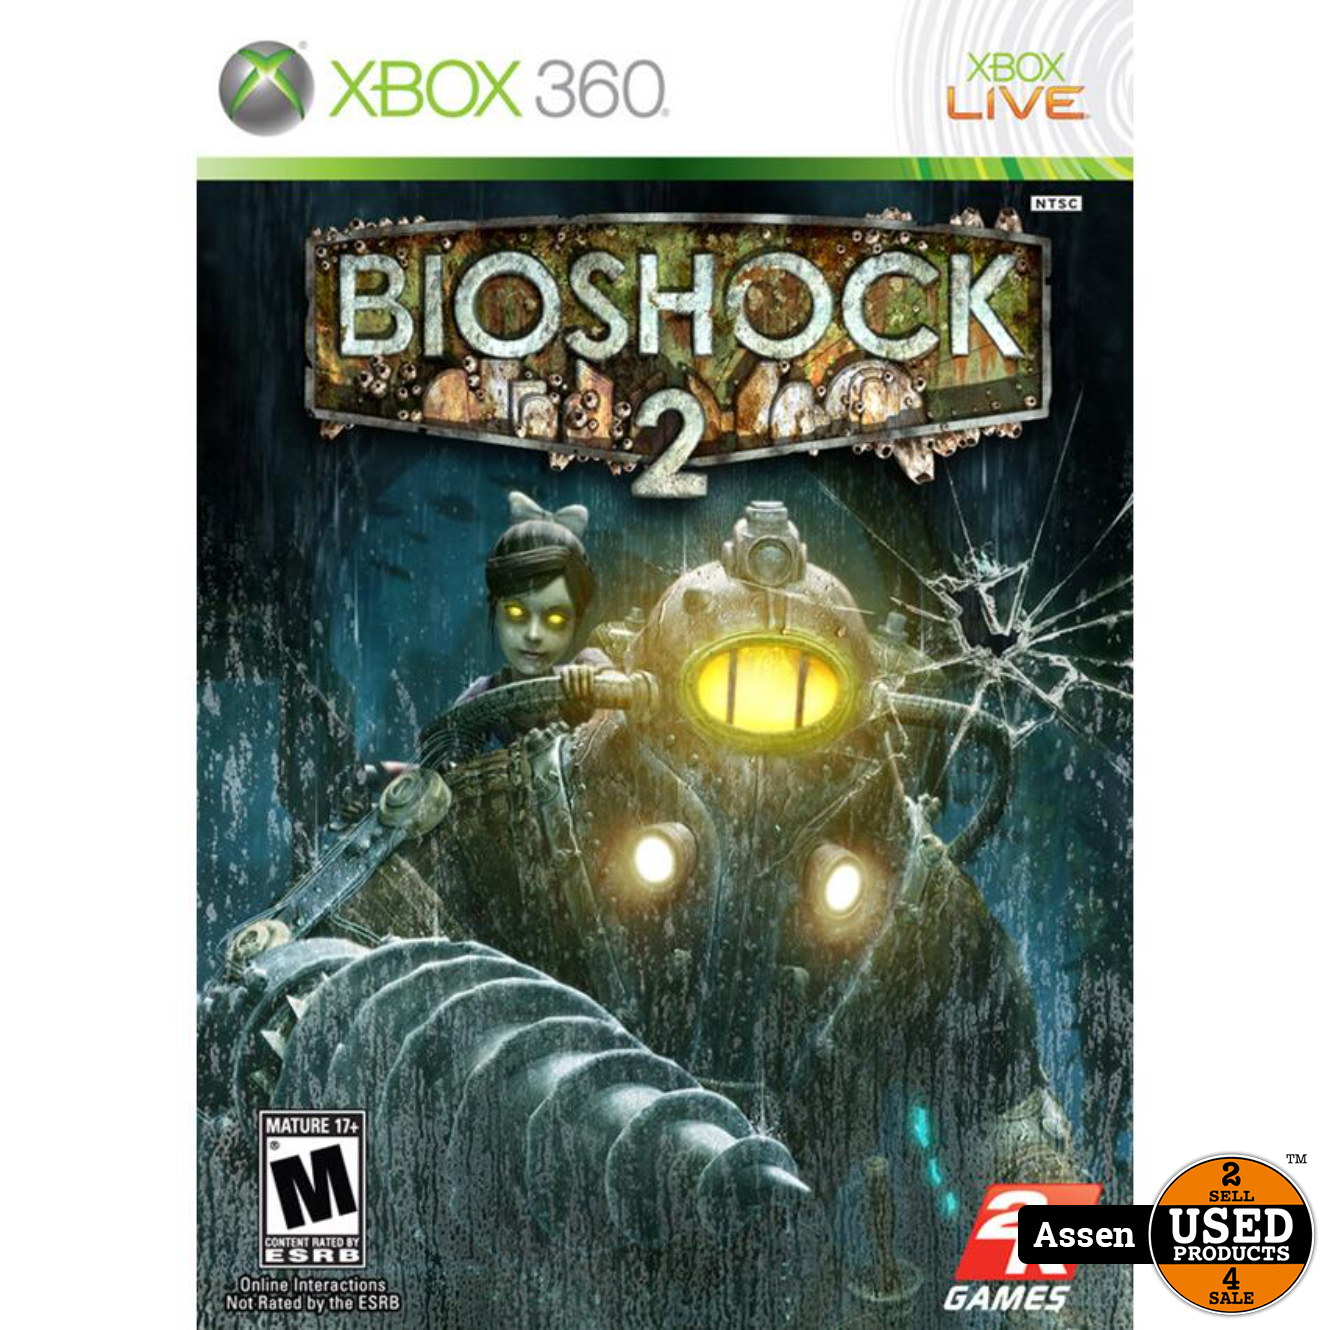 Valkuilen het is mooi Opera Bioshock 2 Xbox 360 Games - Used Products Assen